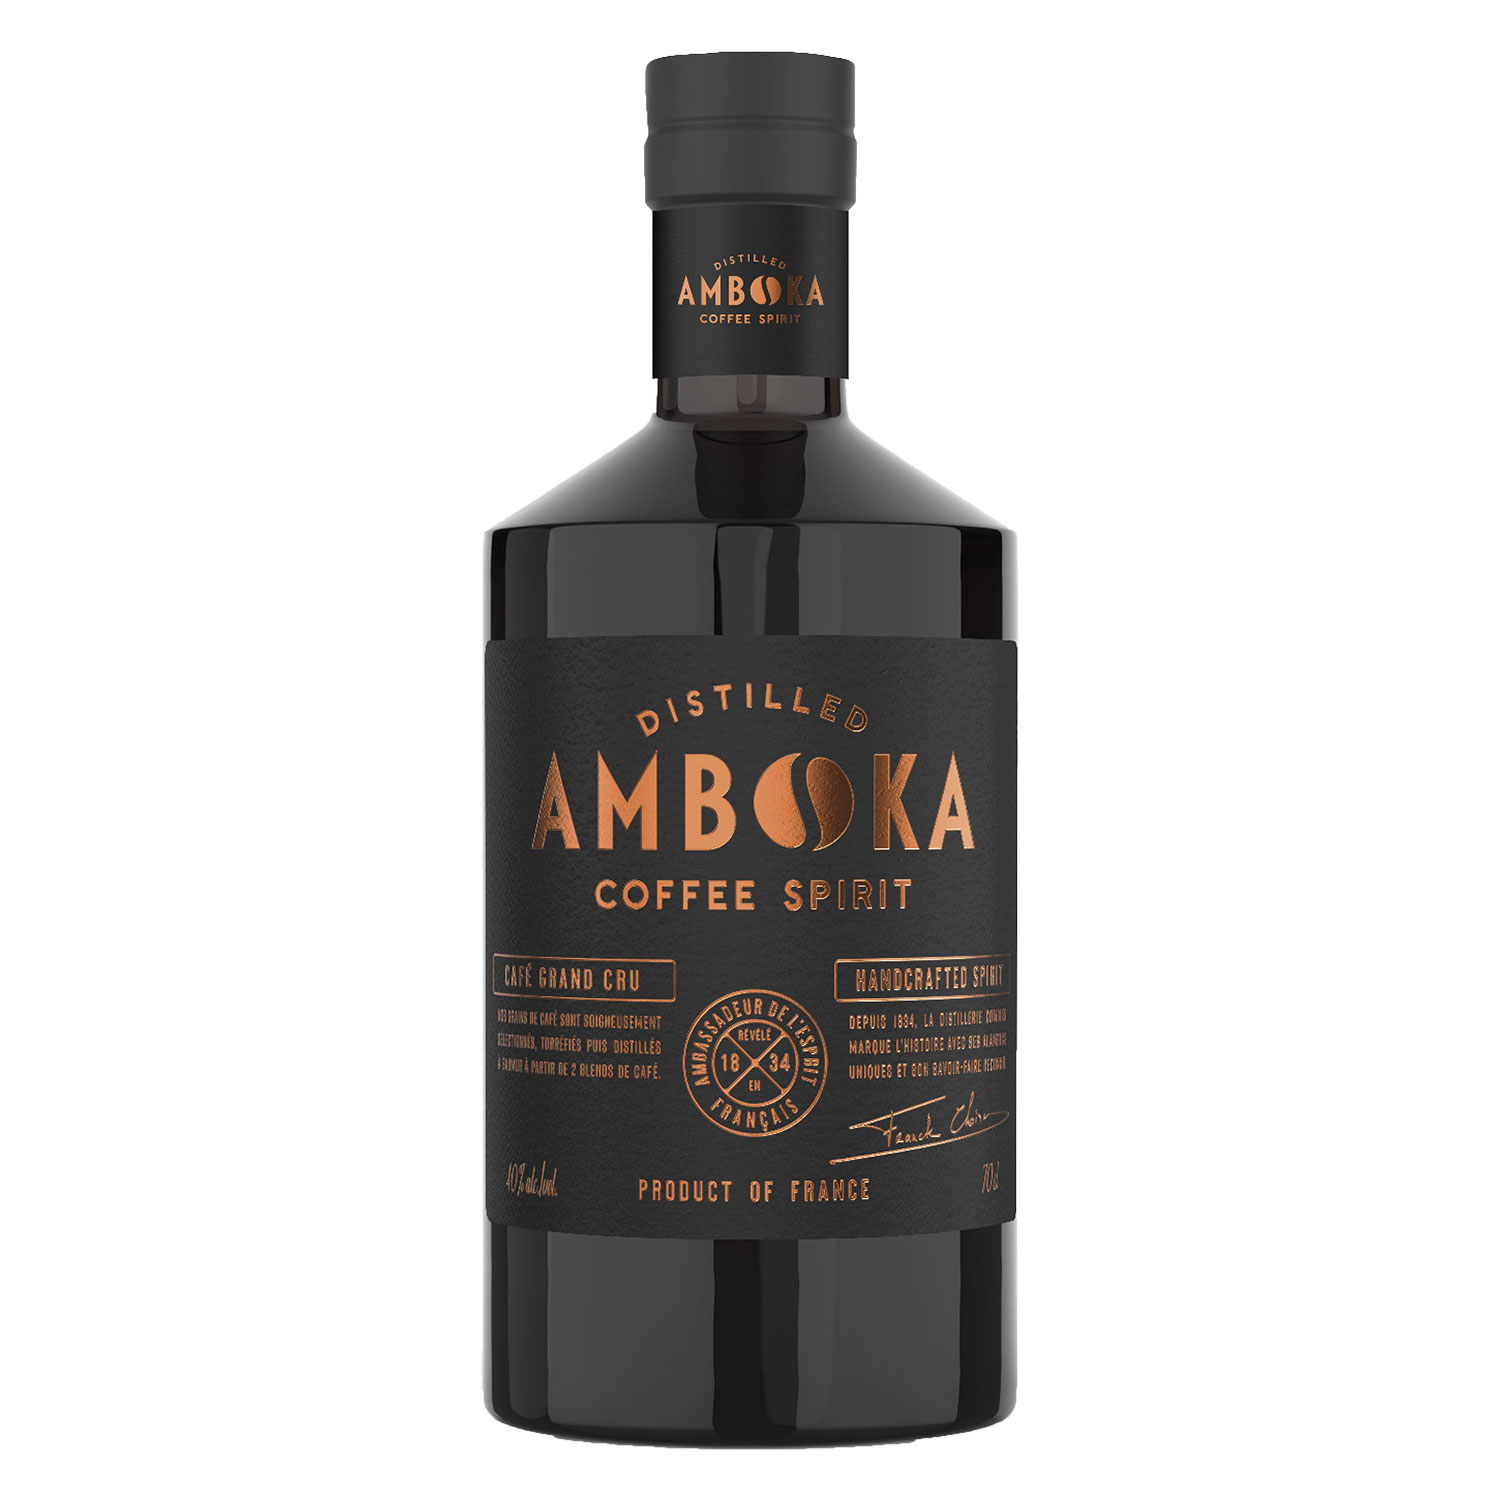 Amboka - Coffee Spirit 700 ml